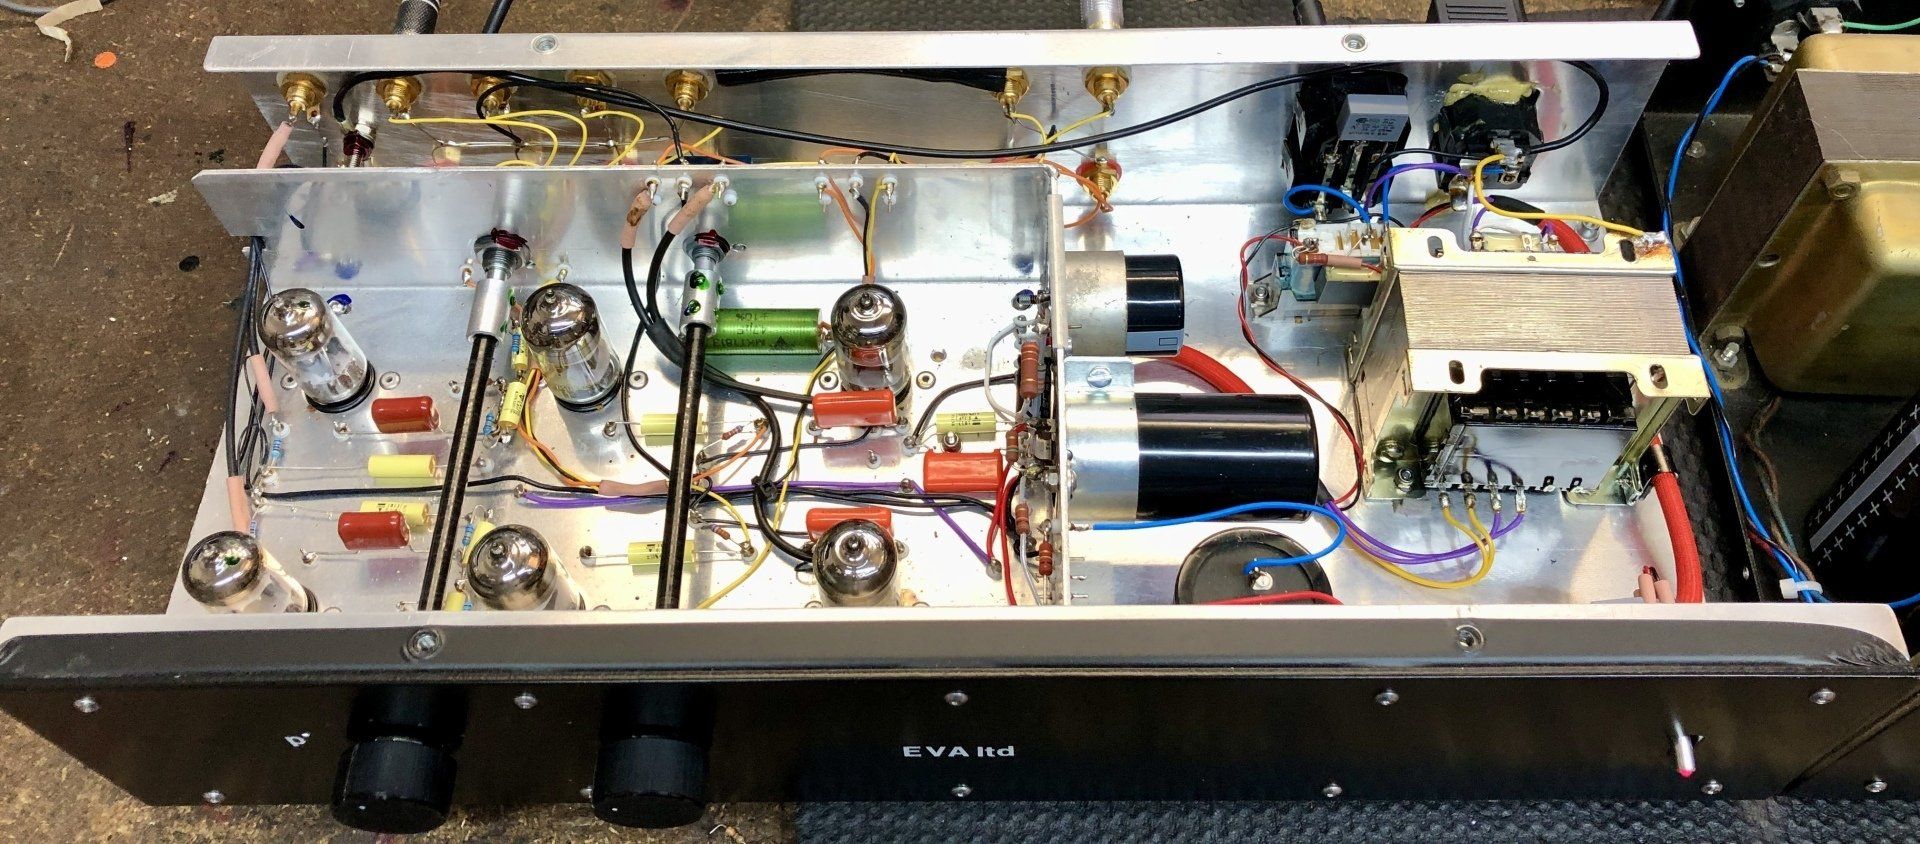 Eva valve pre amplifier